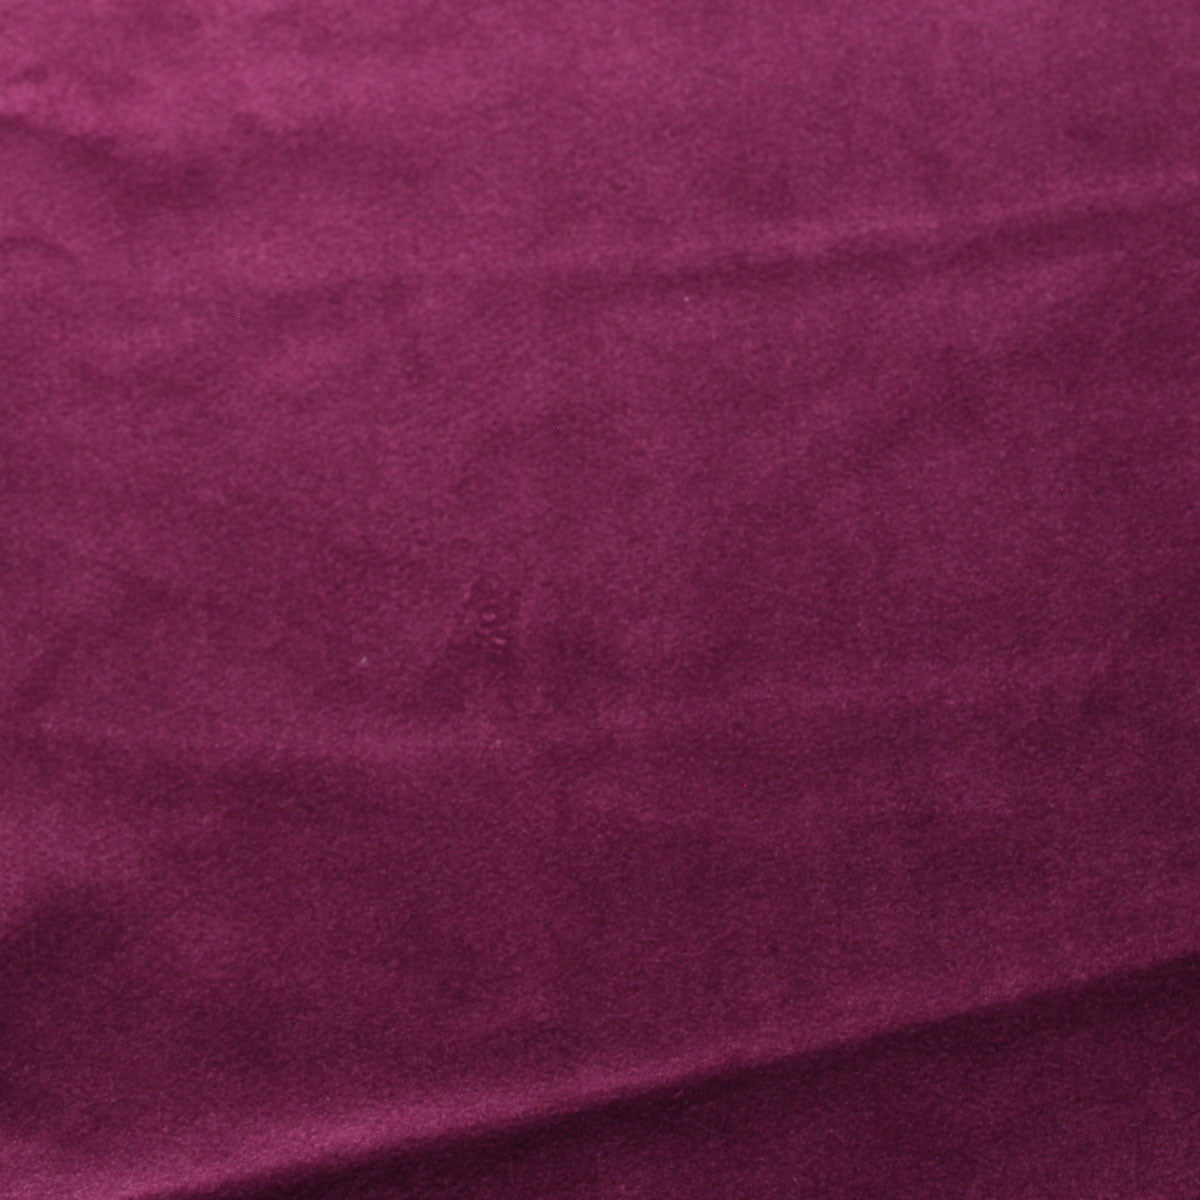 Byzantine Red Camden Velvet Polyester Upholstery Drapery Fabric - Fashion Fabrics Los Angeles 